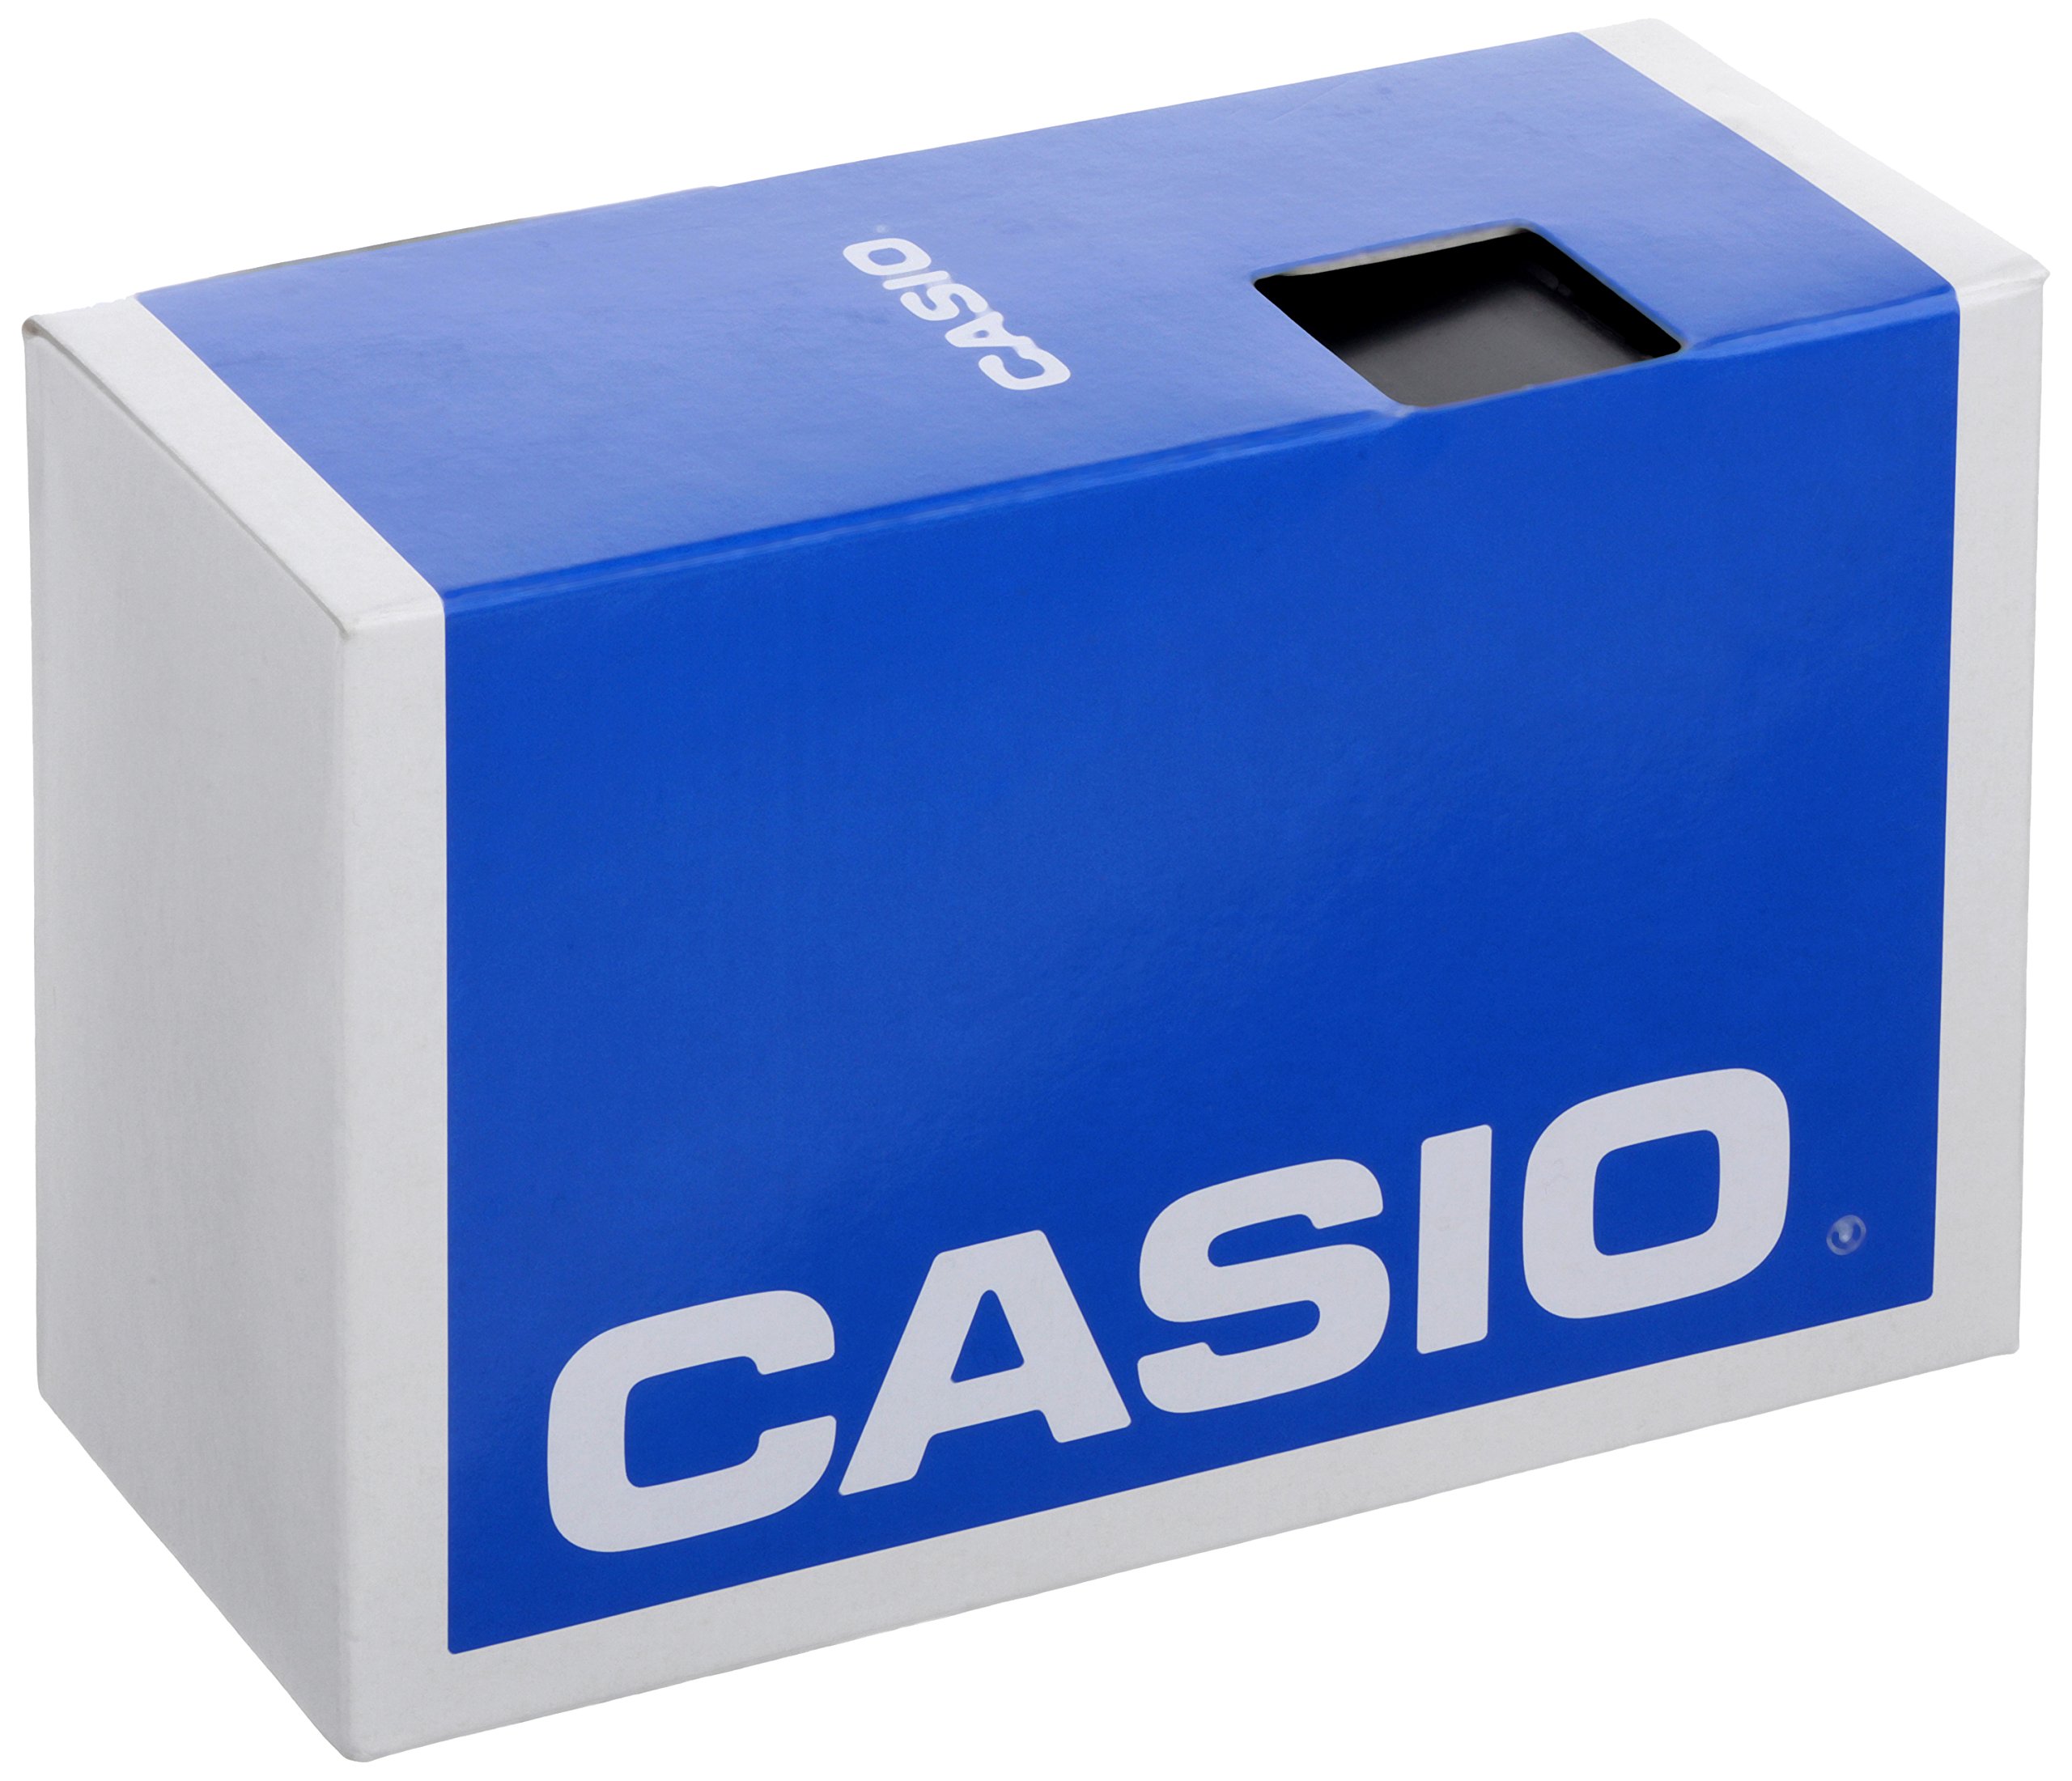 Casio Men's F105W-1A Illuminator Sport Watch